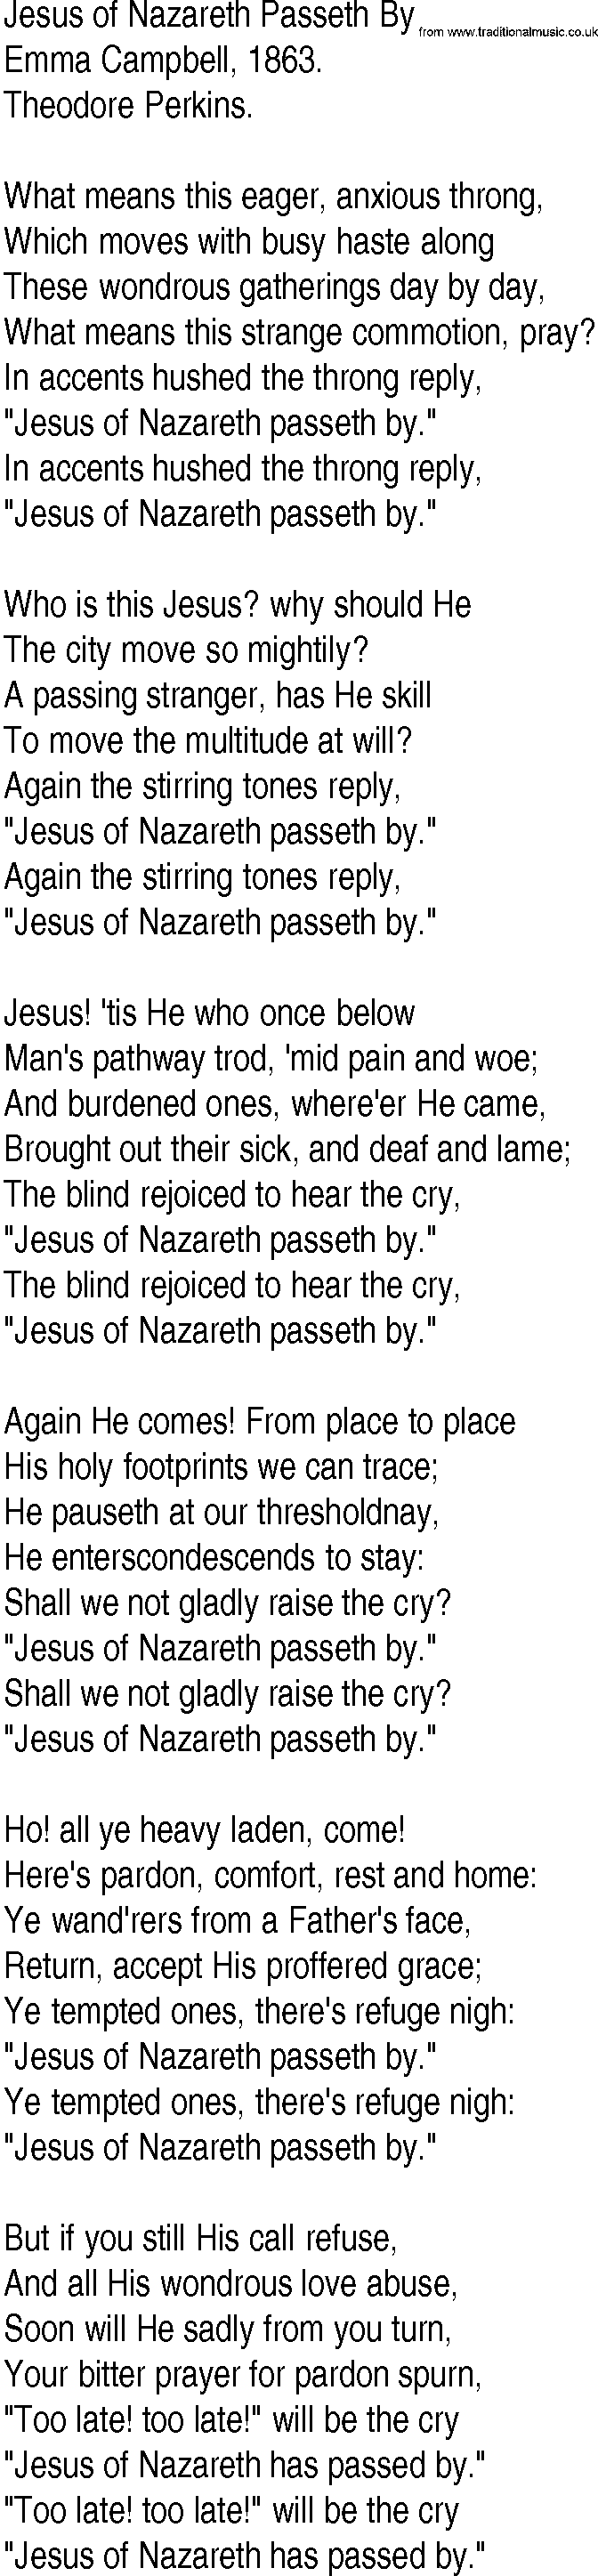 Hymn and Gospel Song: Jesus of Nazareth Passeth By by Emma Campbell lyrics